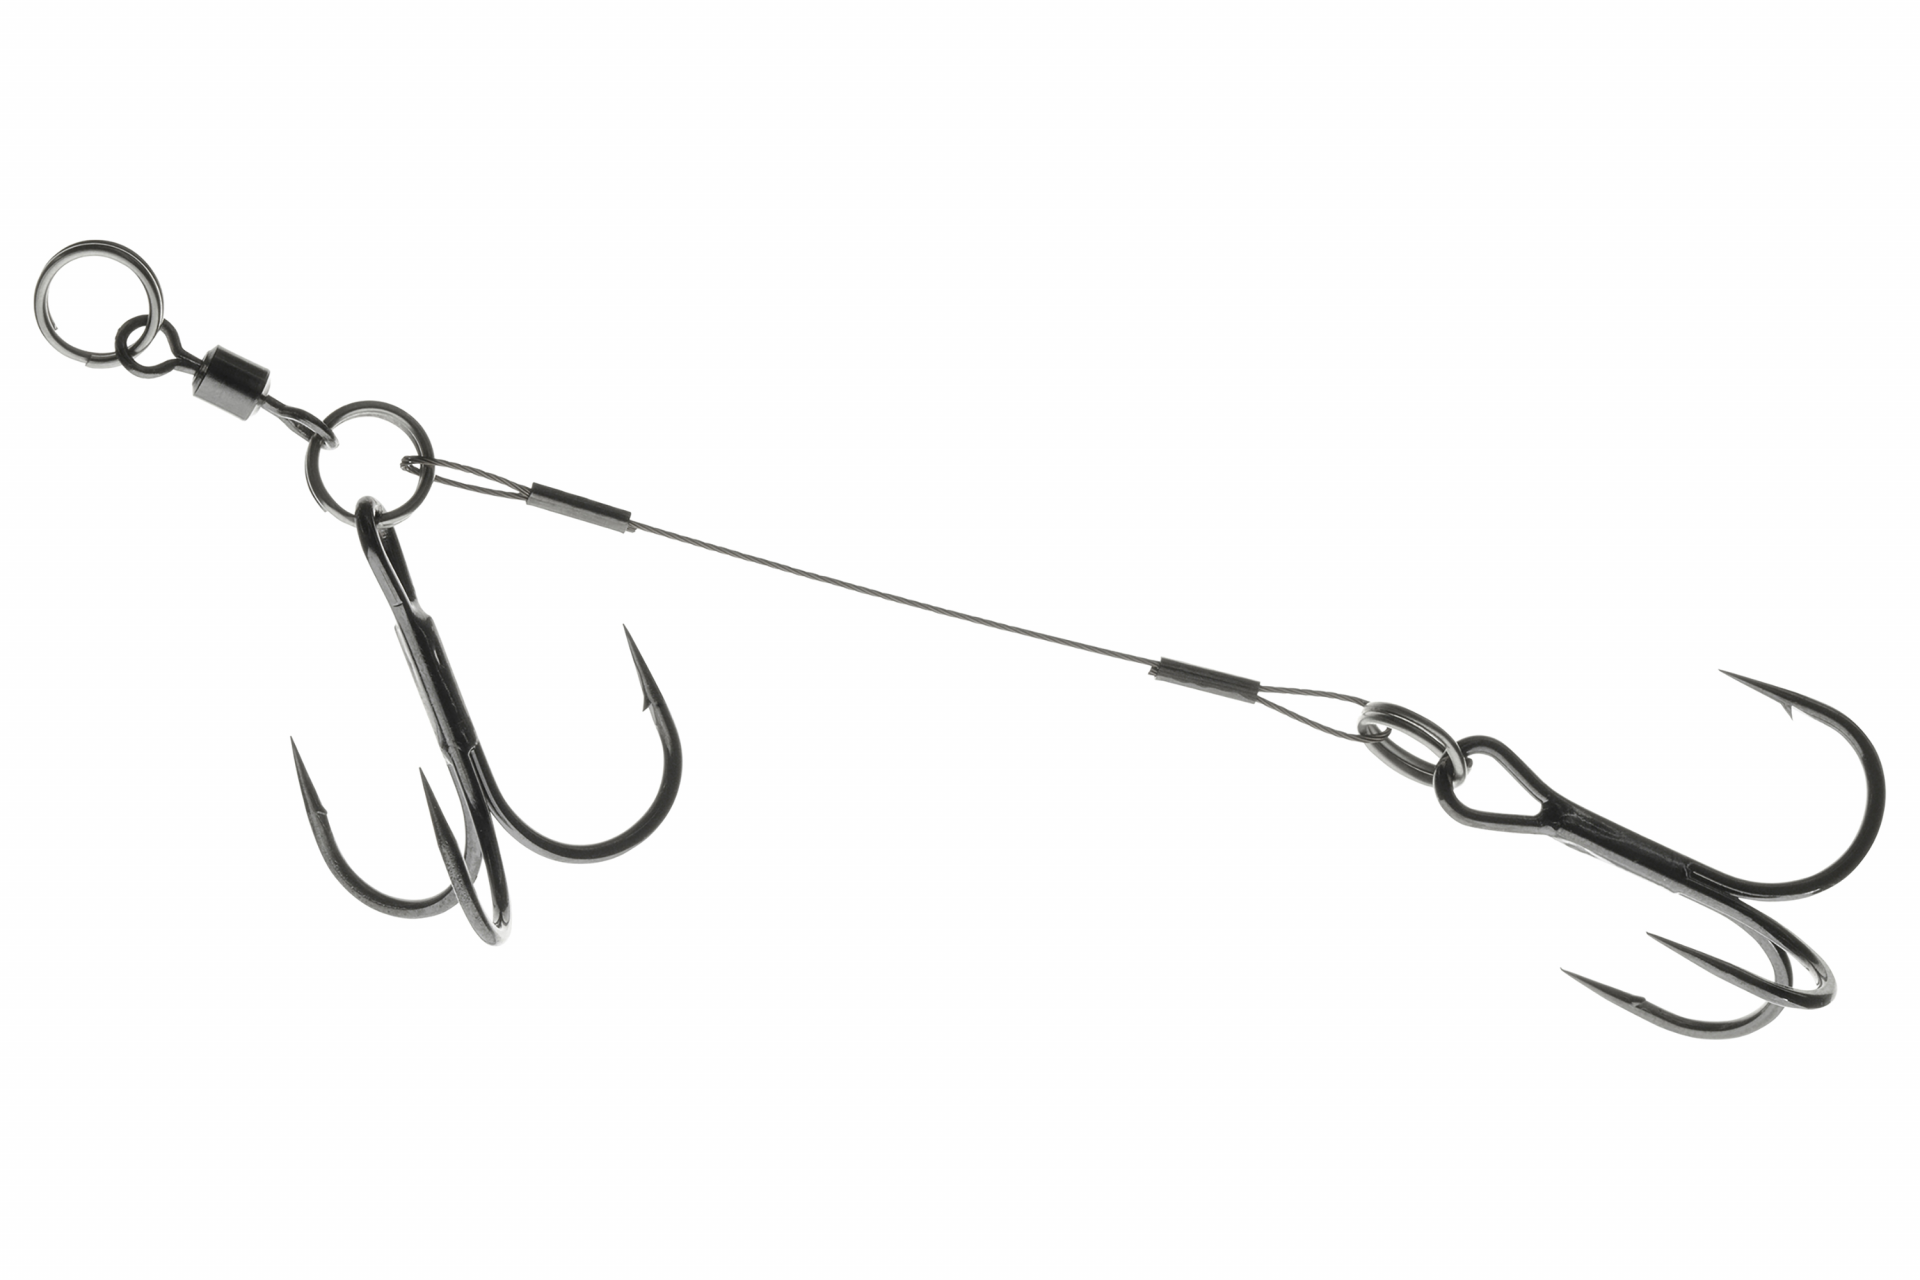 Prorex Screw-In Assist Hook <span>| Stinger hook system</span>